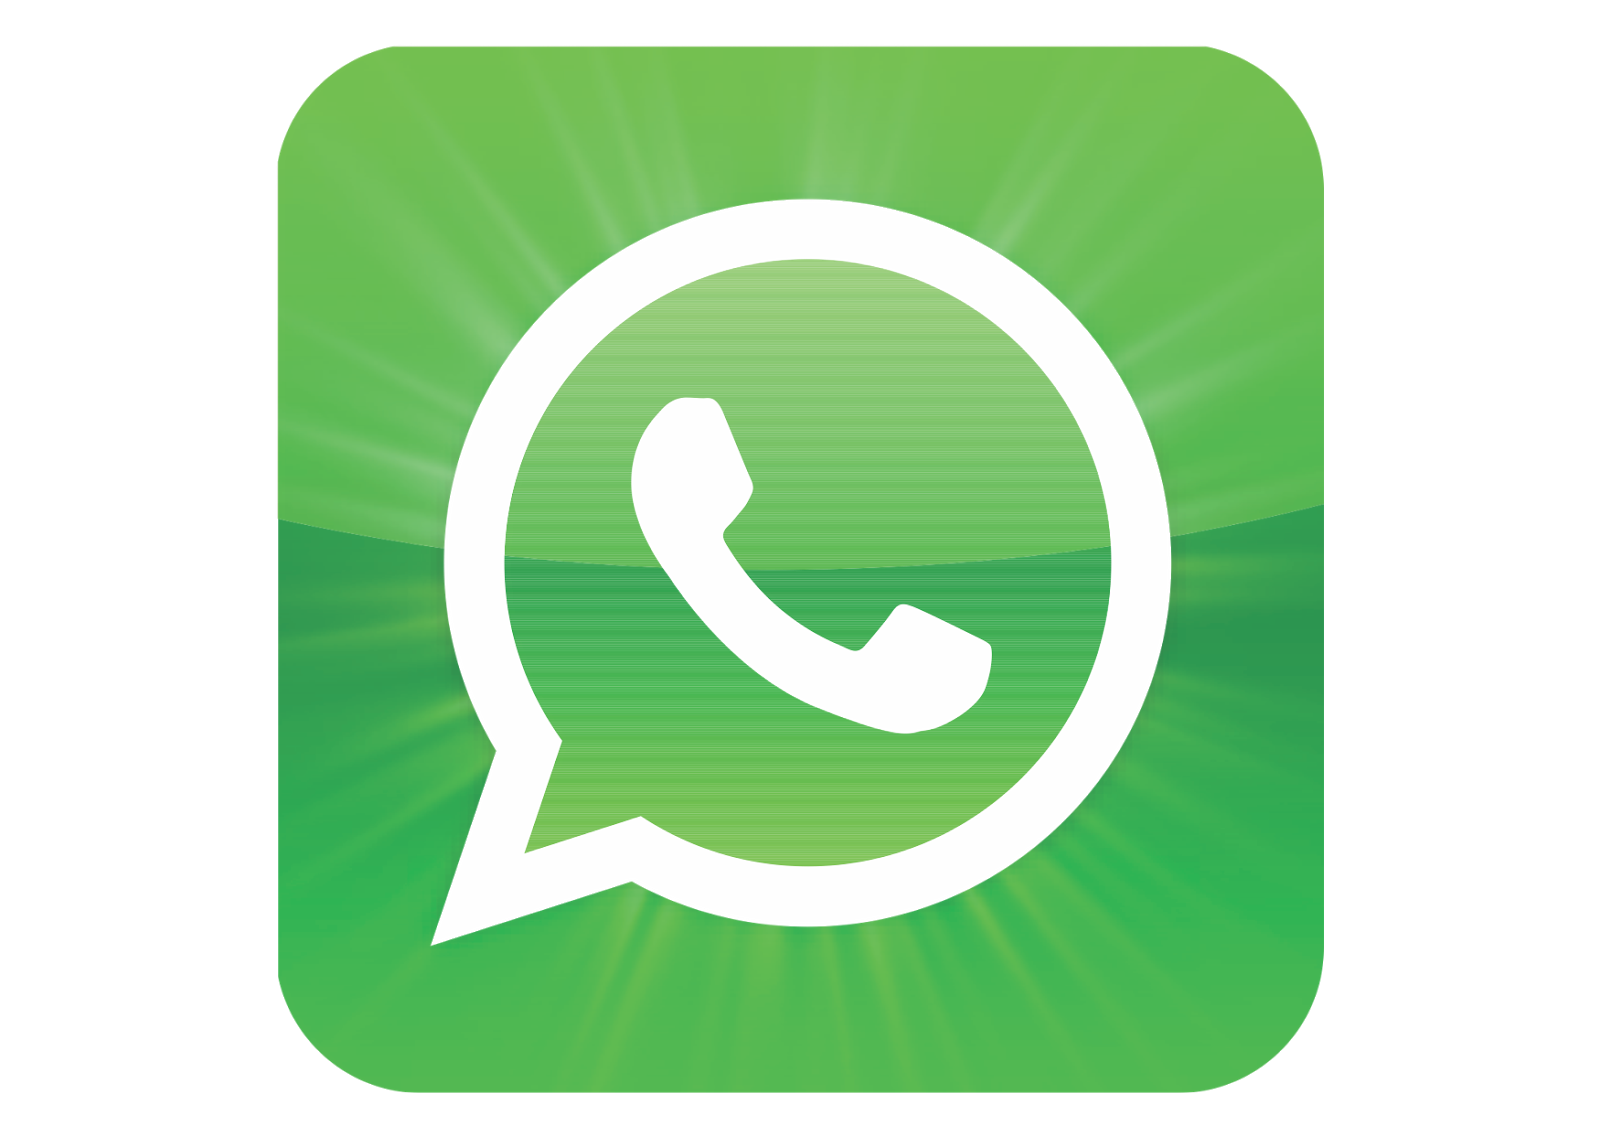 WhatsApp Logo Cdr - Whatsapp logo PNG png download - 1600*1136 - Free